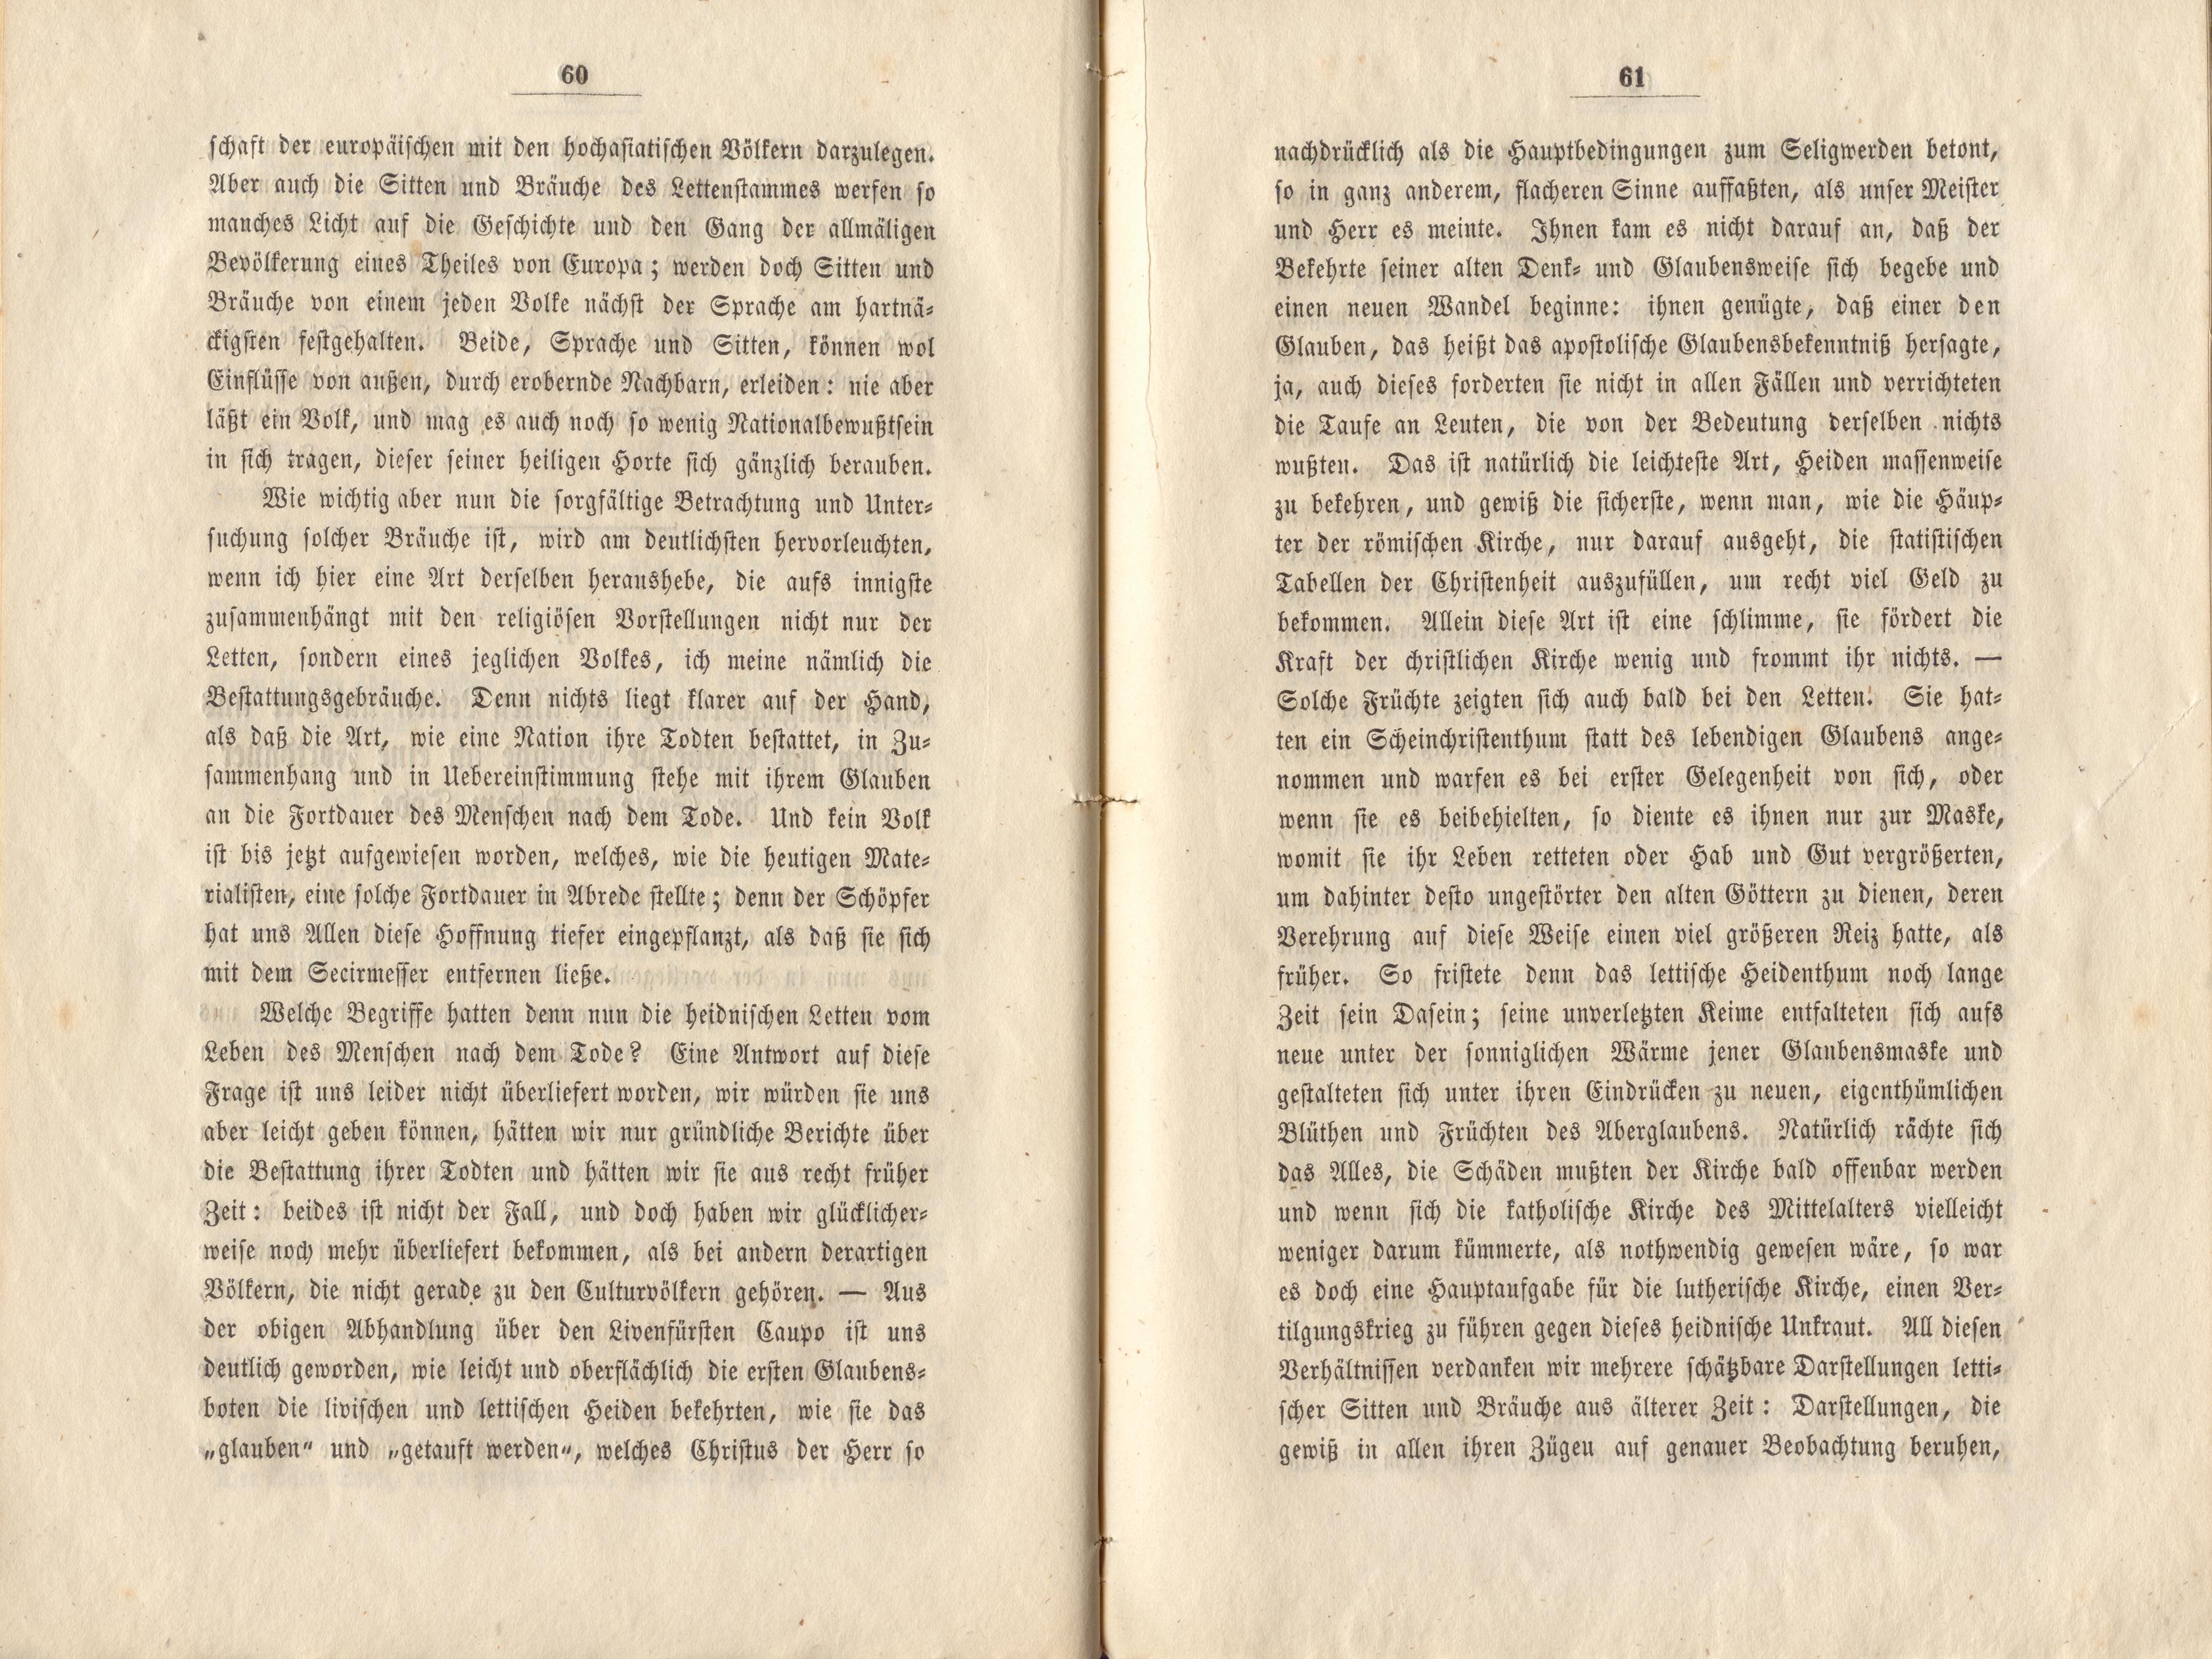 Felliner Blätter (1859) | 31. (60-61) Основной текст